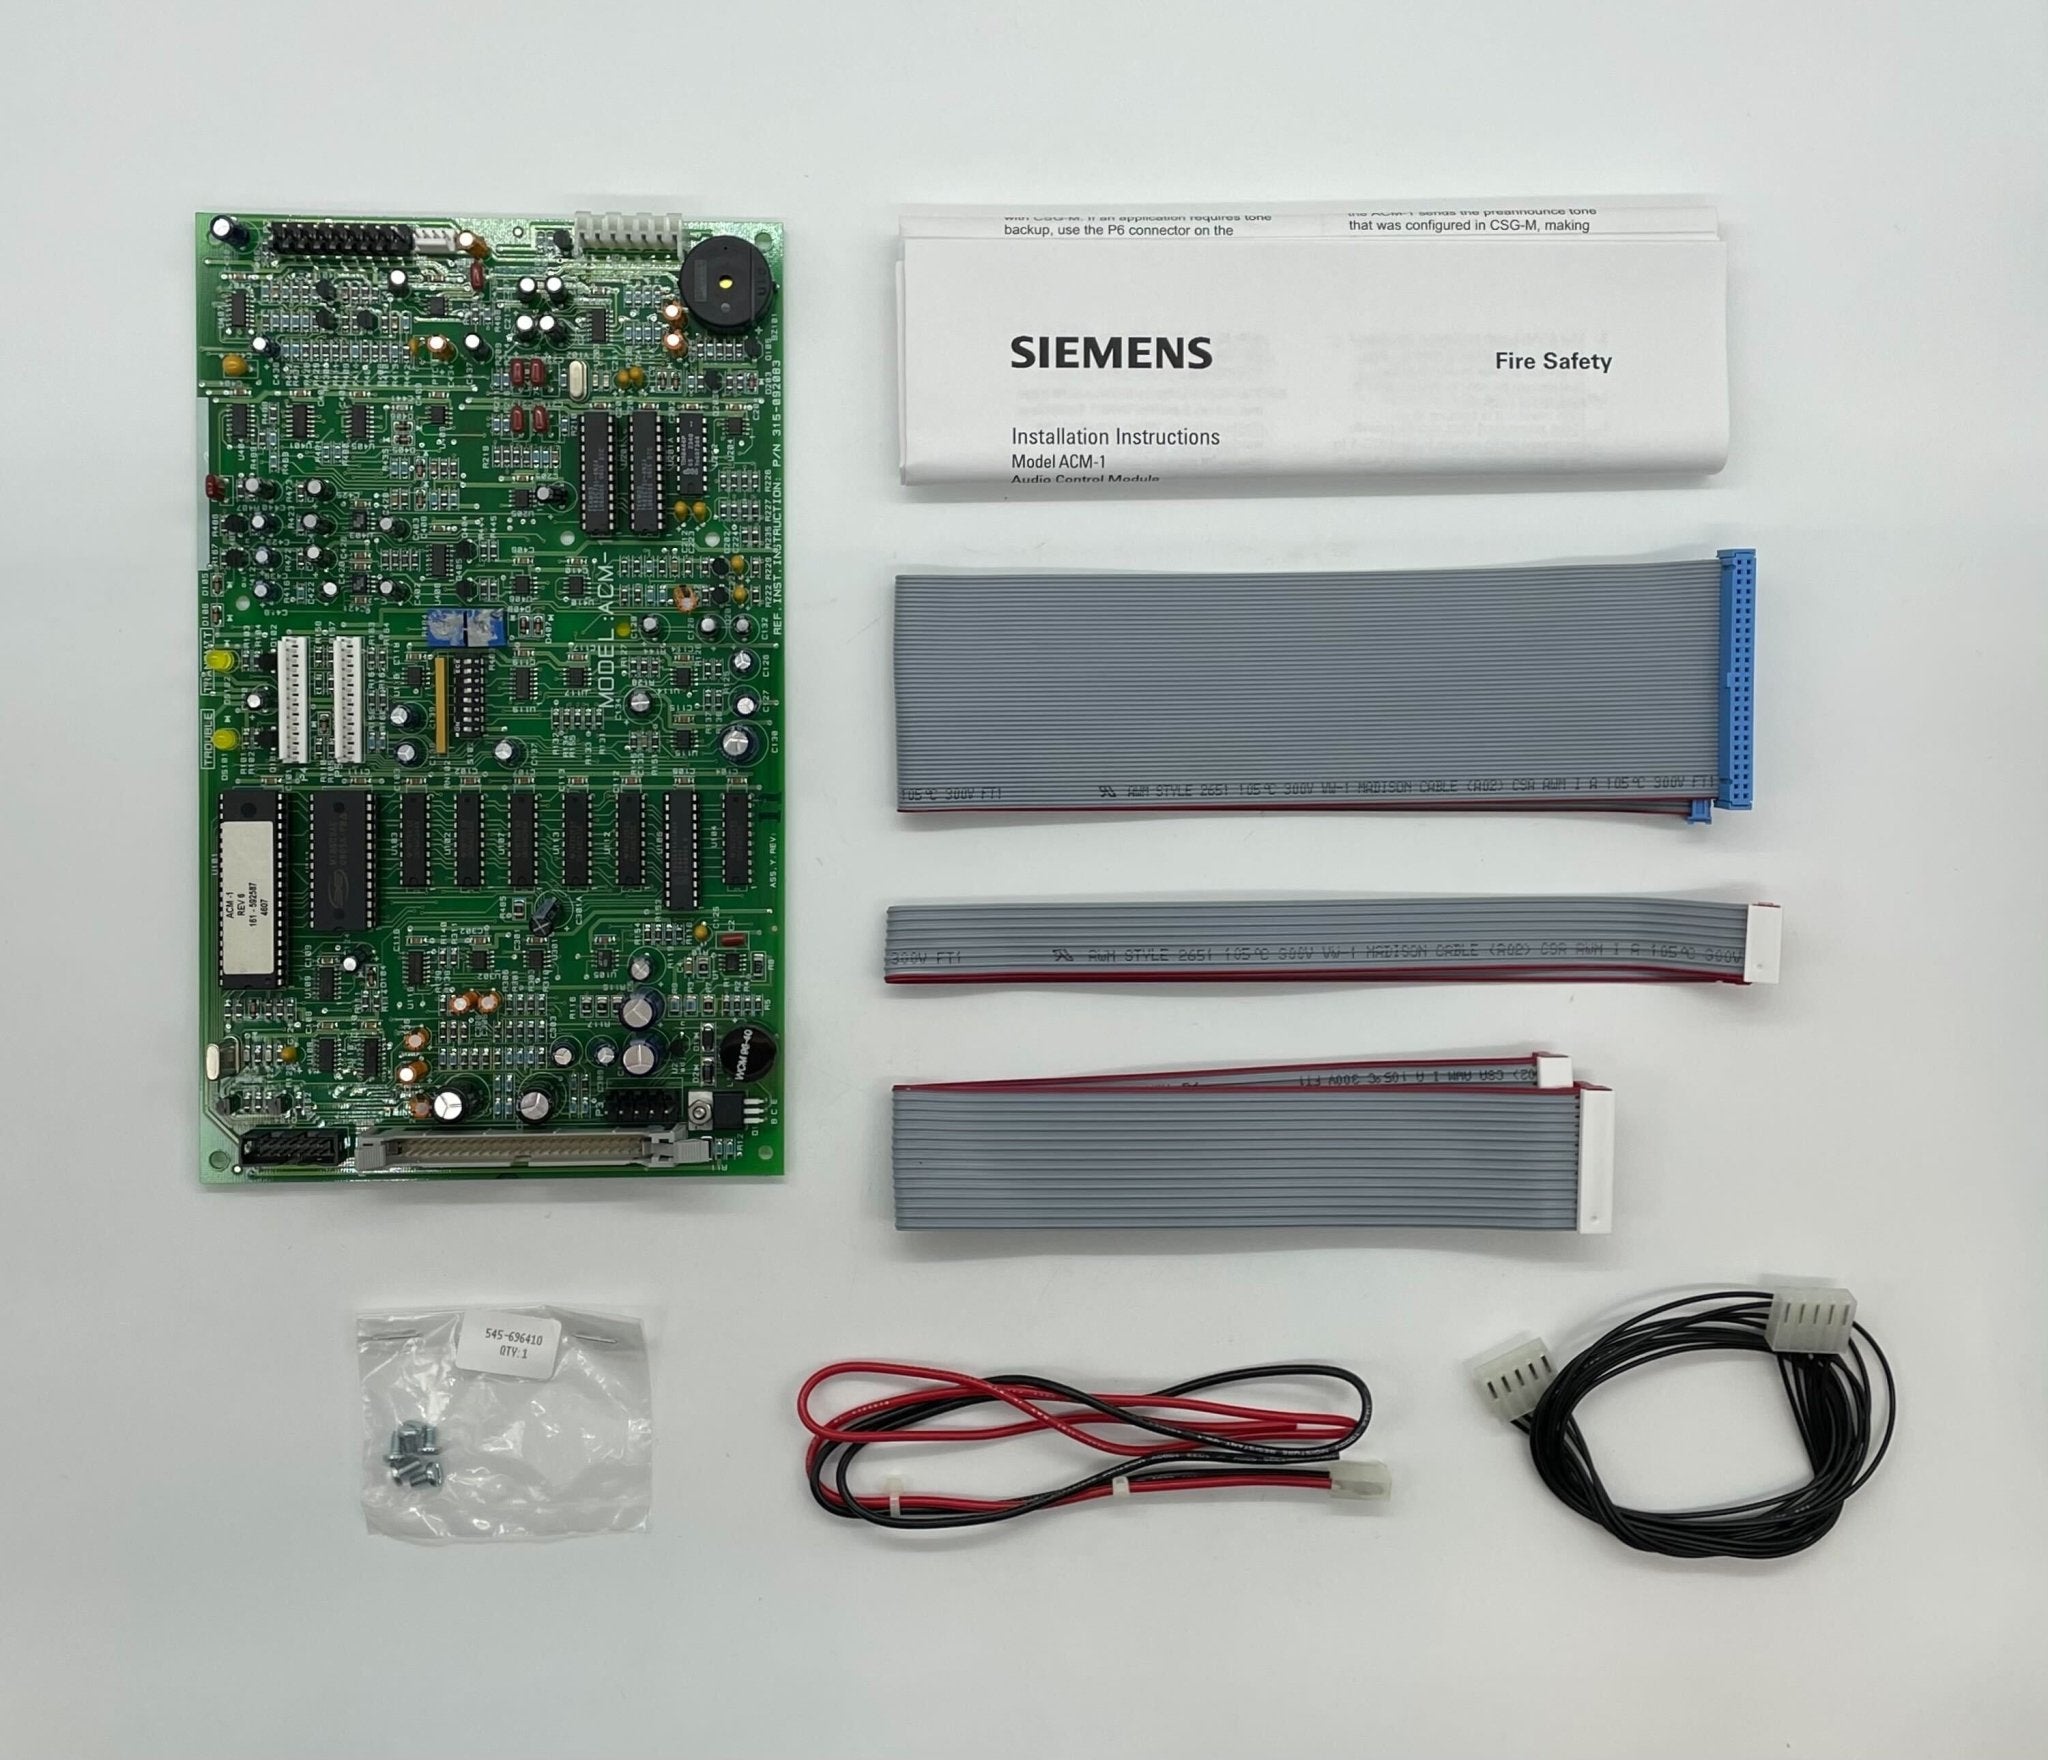 Siemens ACM-1 - The Fire Alarm Supplier